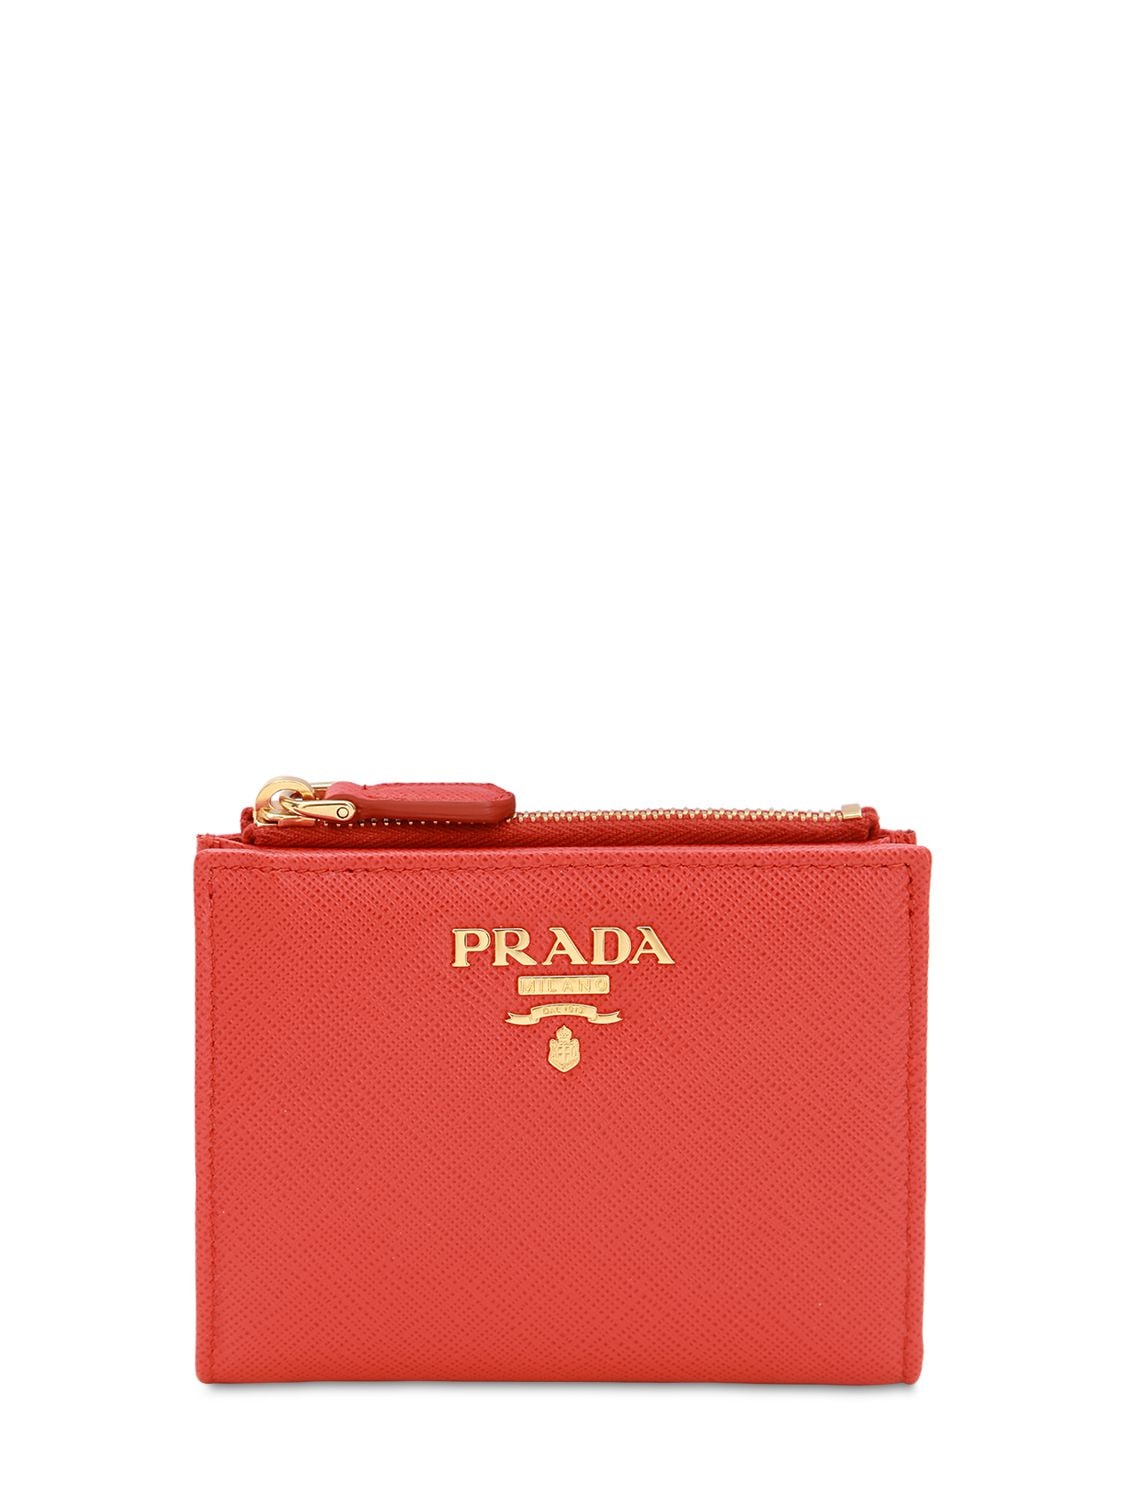 Prada Saffiano Leather Wallet In Orange